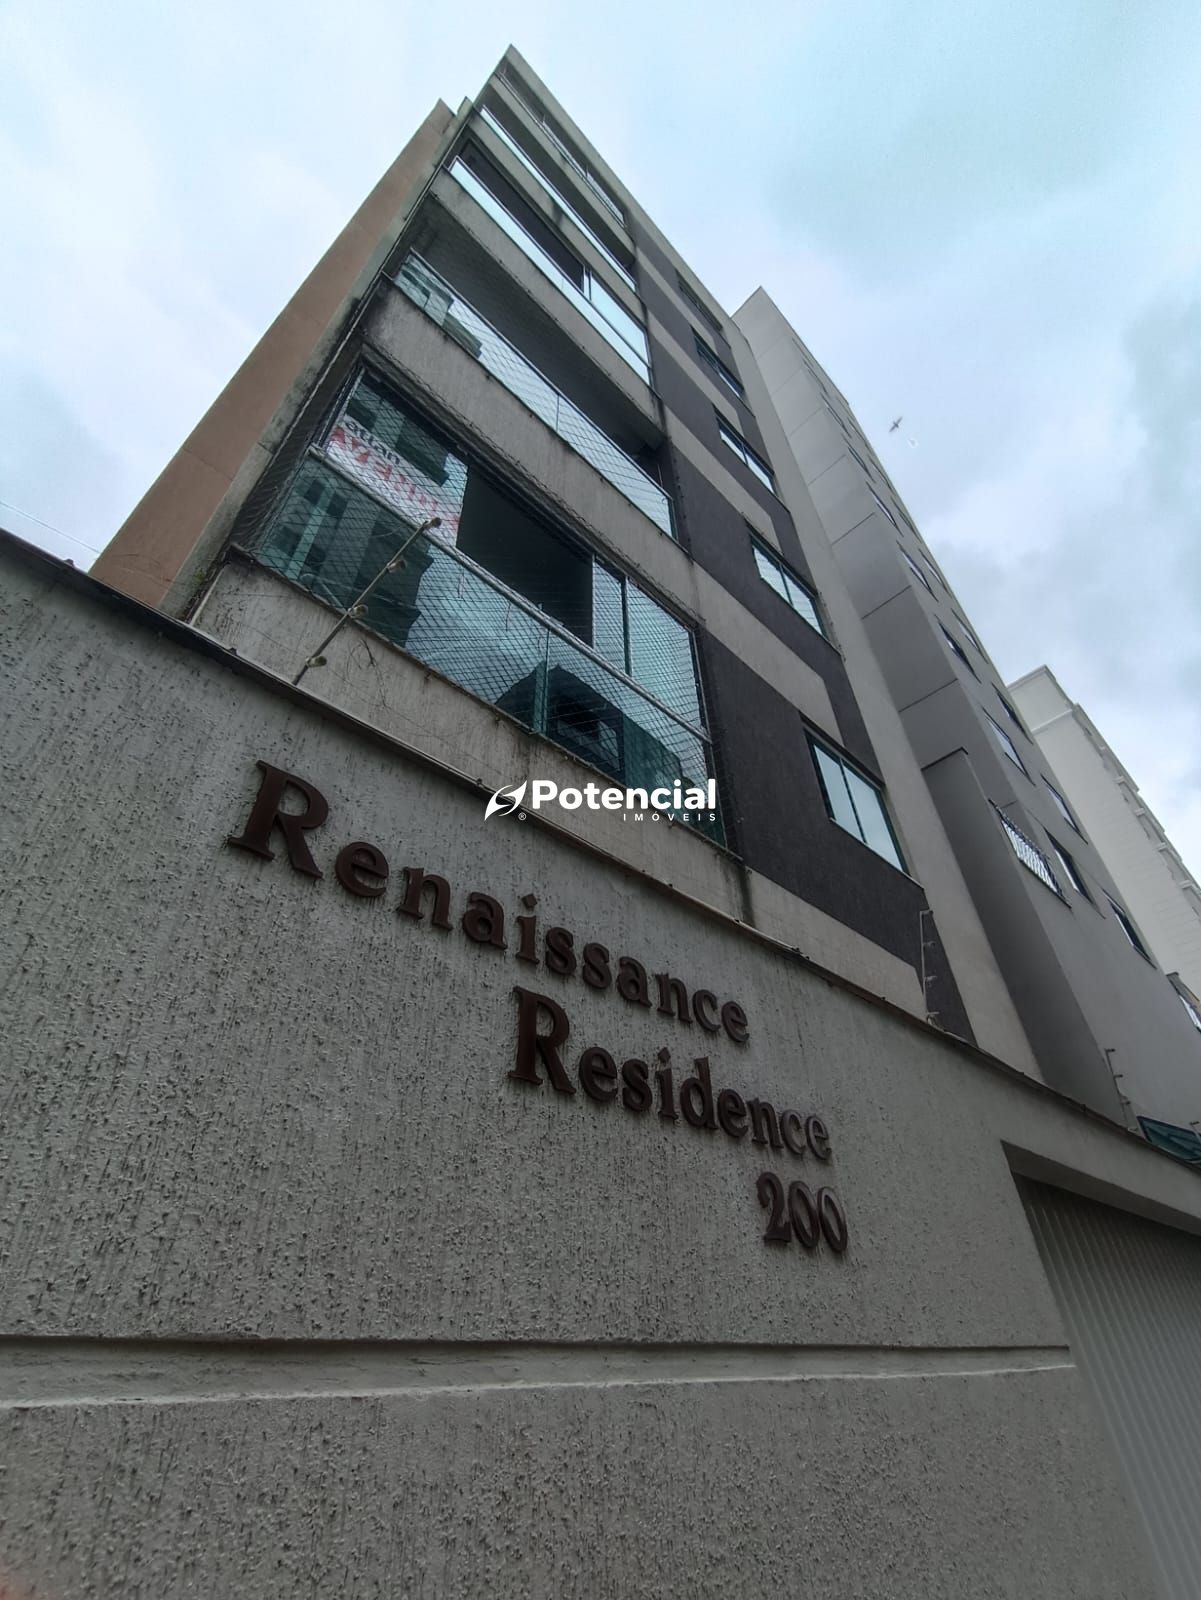 Fachada 2 - Renaissence Residence